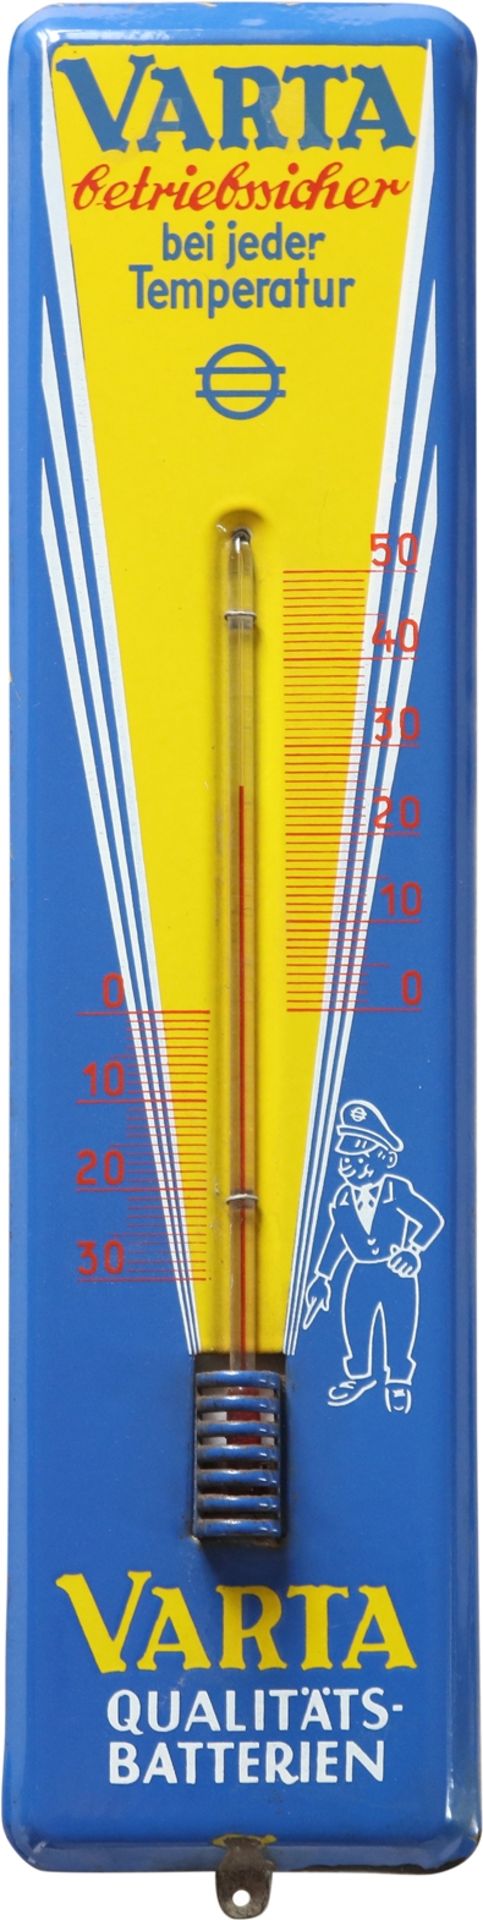 Enamel sign thermometer Varta batteries, Hagen-Wehringhausen, around 1960